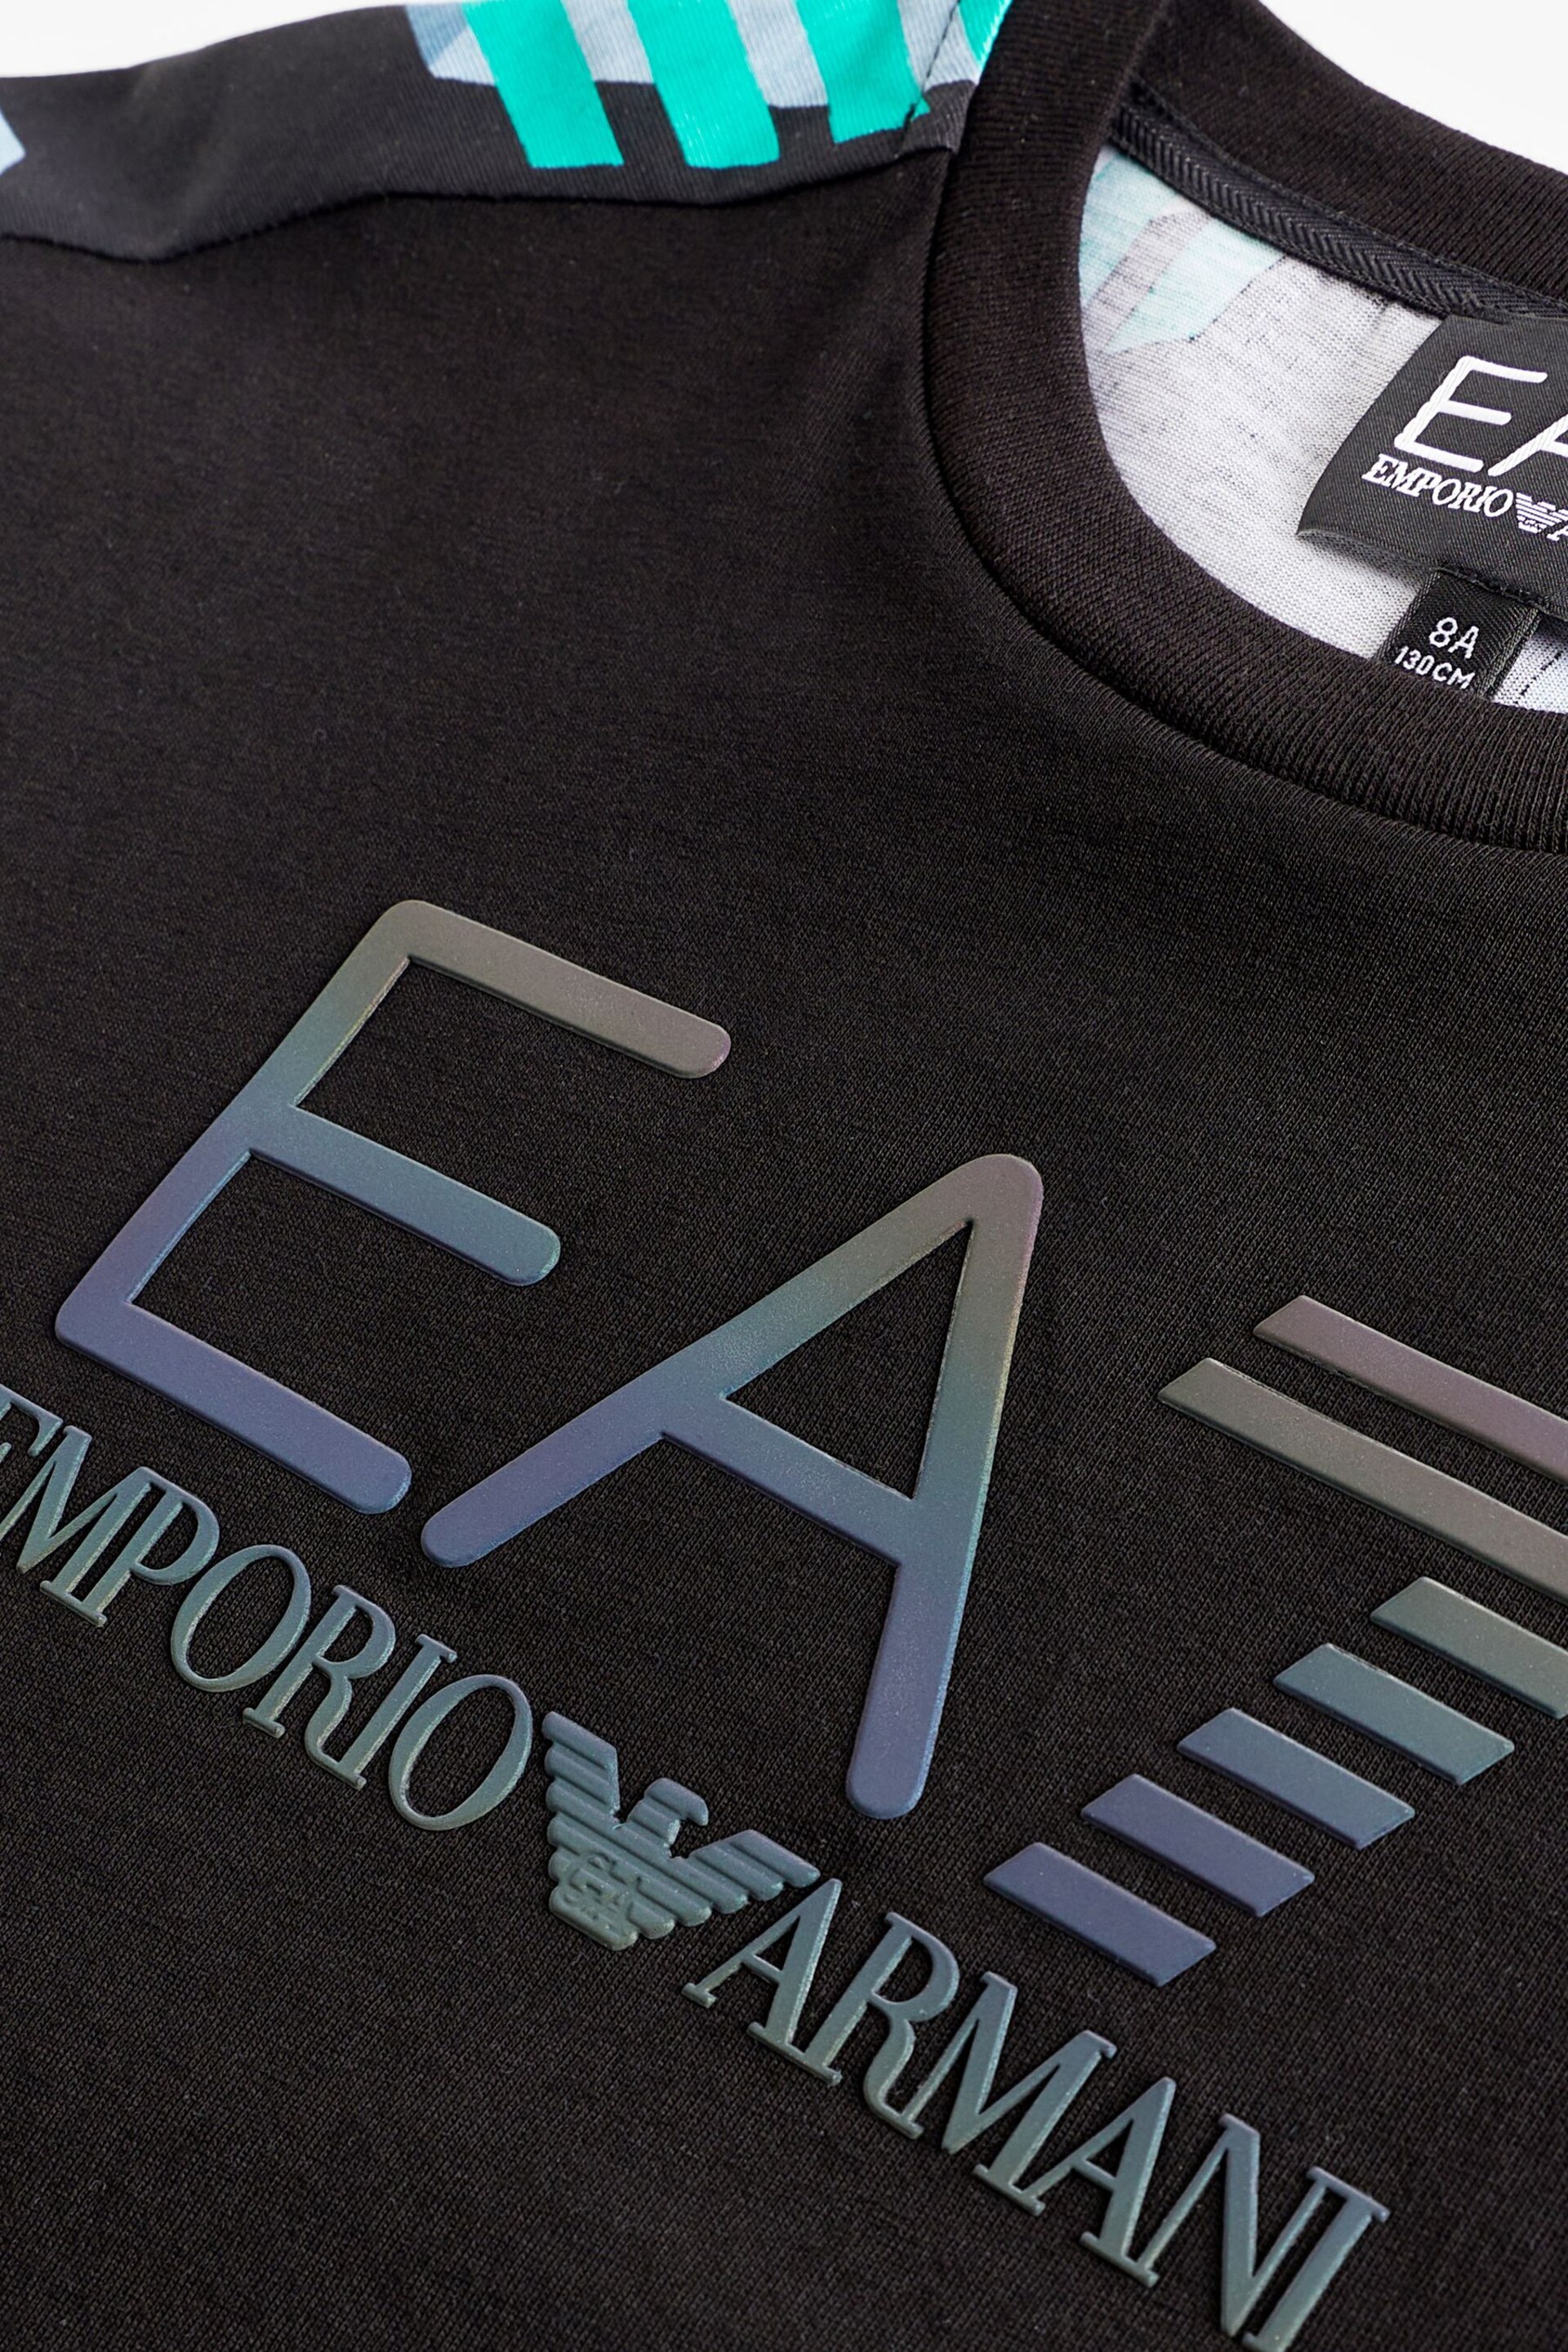 Emporio Armani EA7 Boys Geometric Graphic T-Shirt - Image 3 of 3